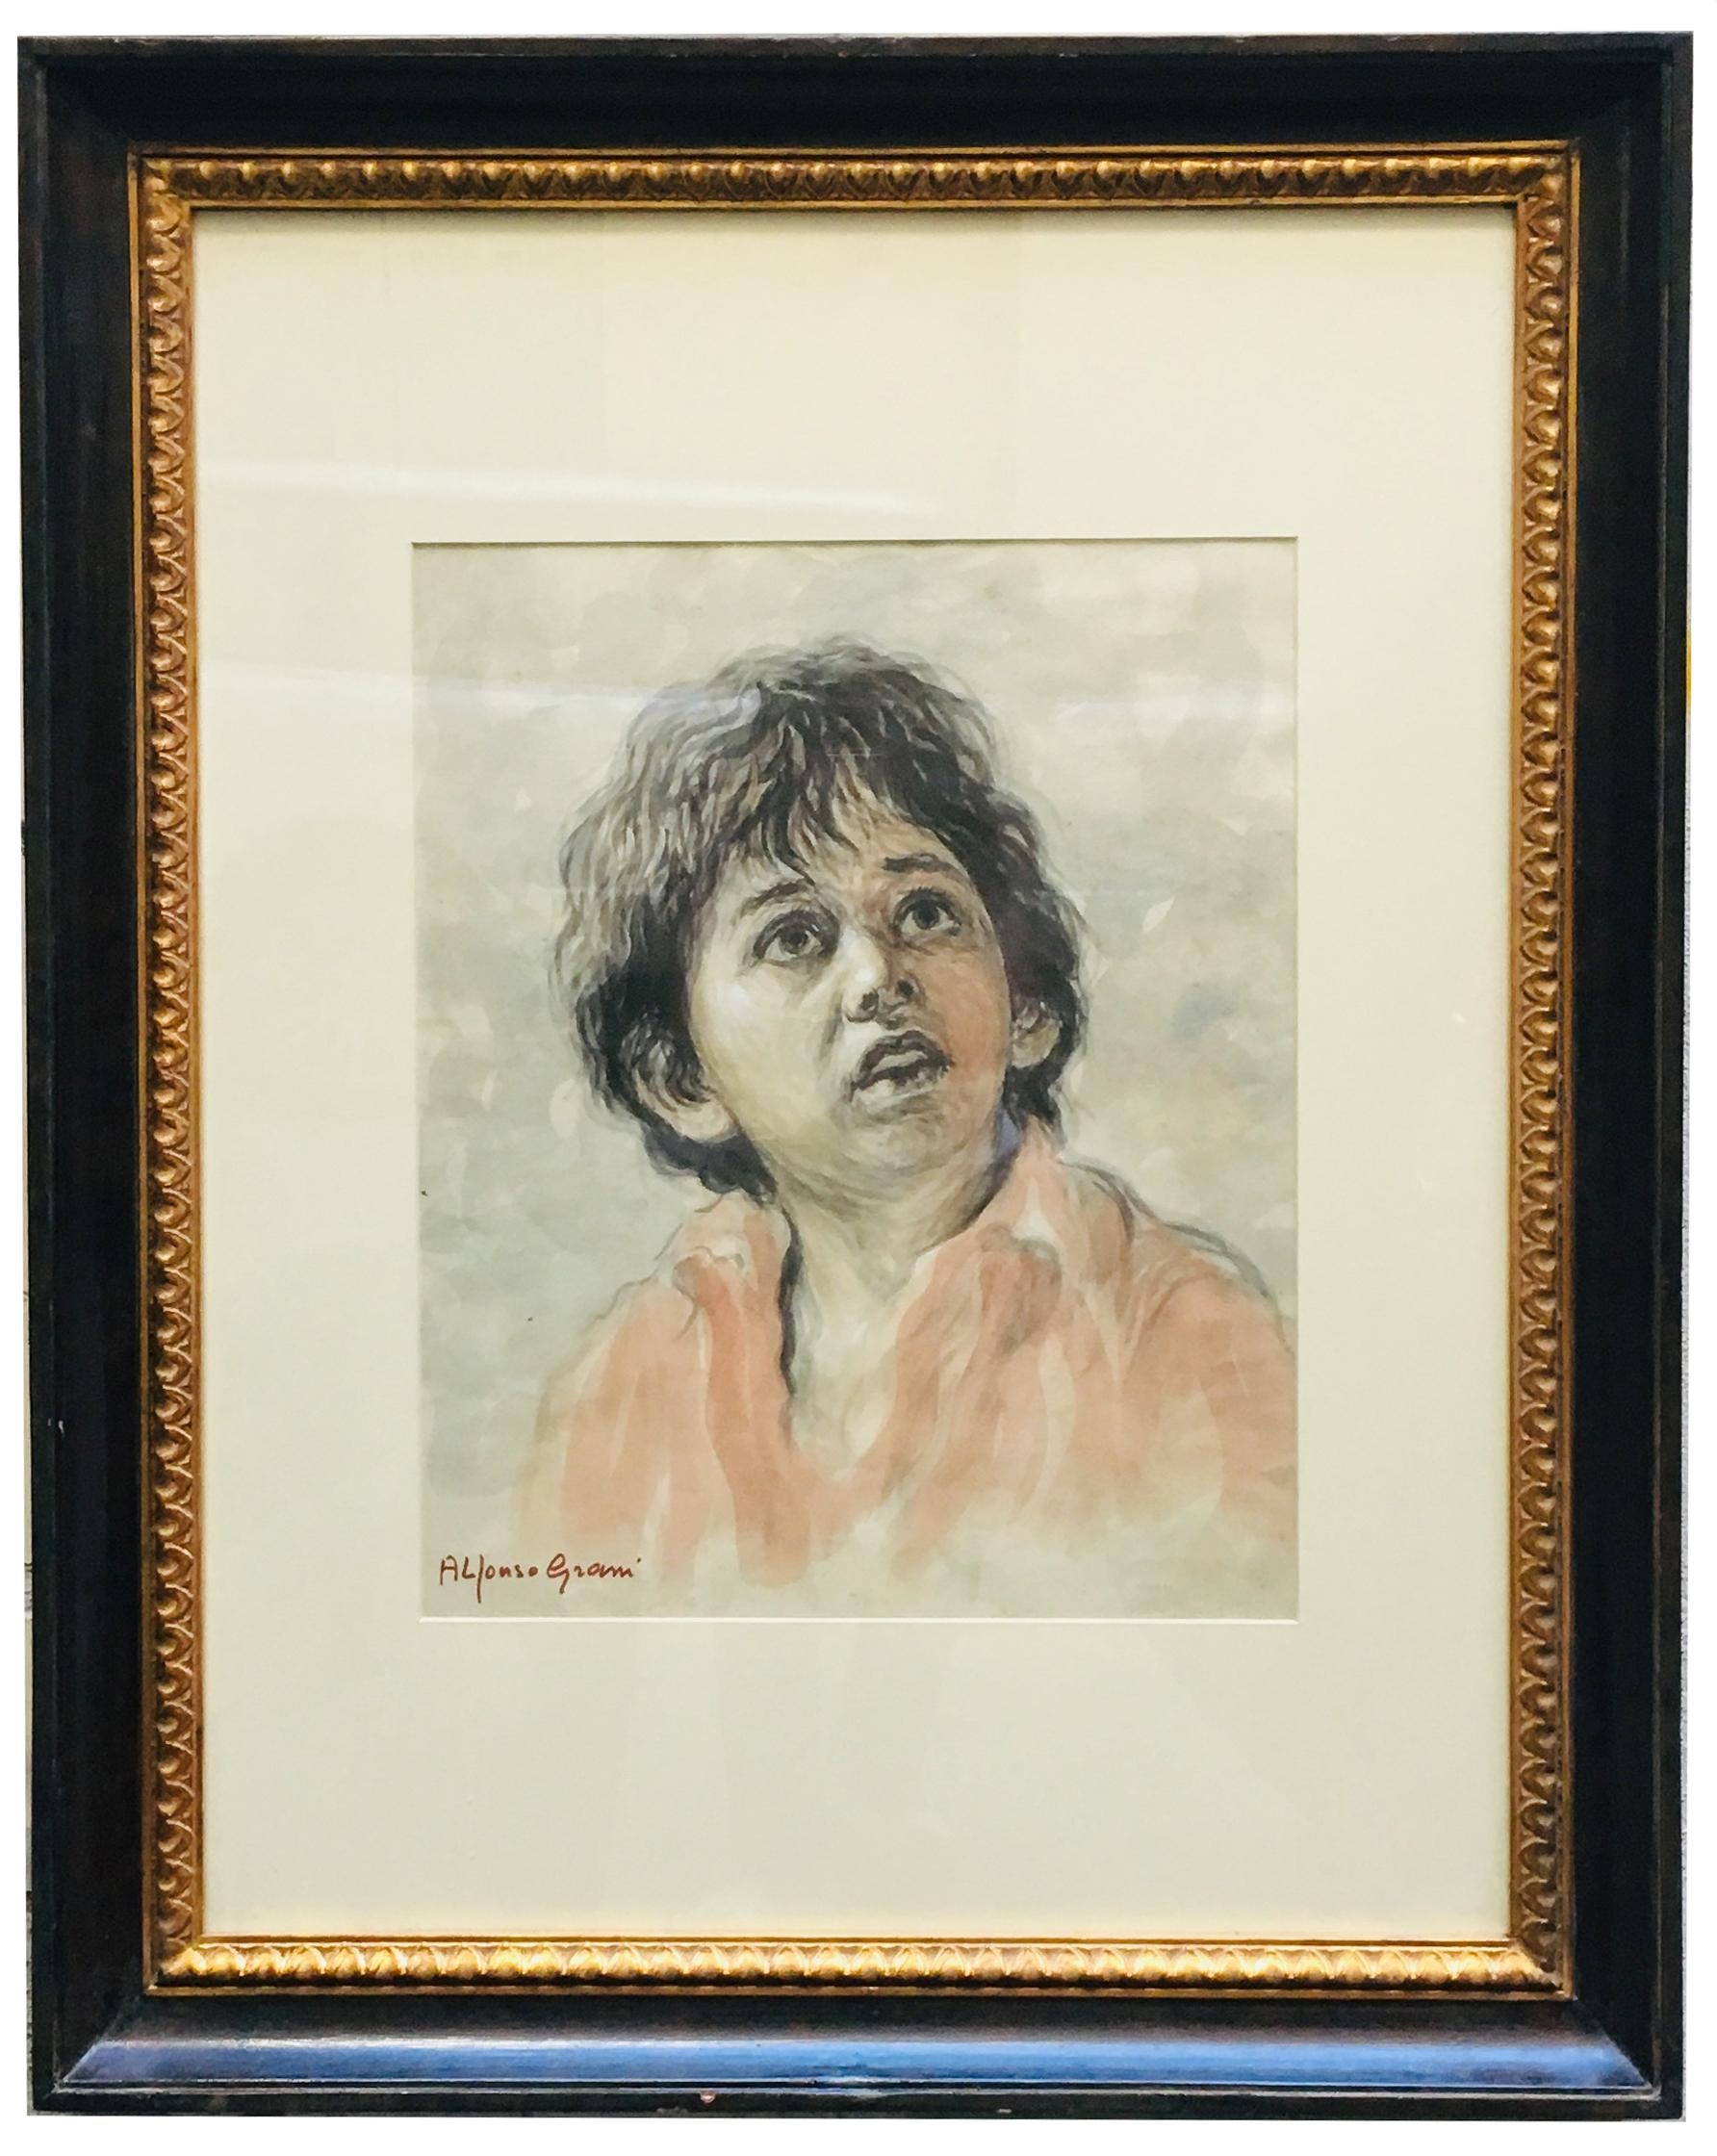 CHILD - Alfonso Grassi Aquarell auf Papier  Italienisches Porträtgemälde